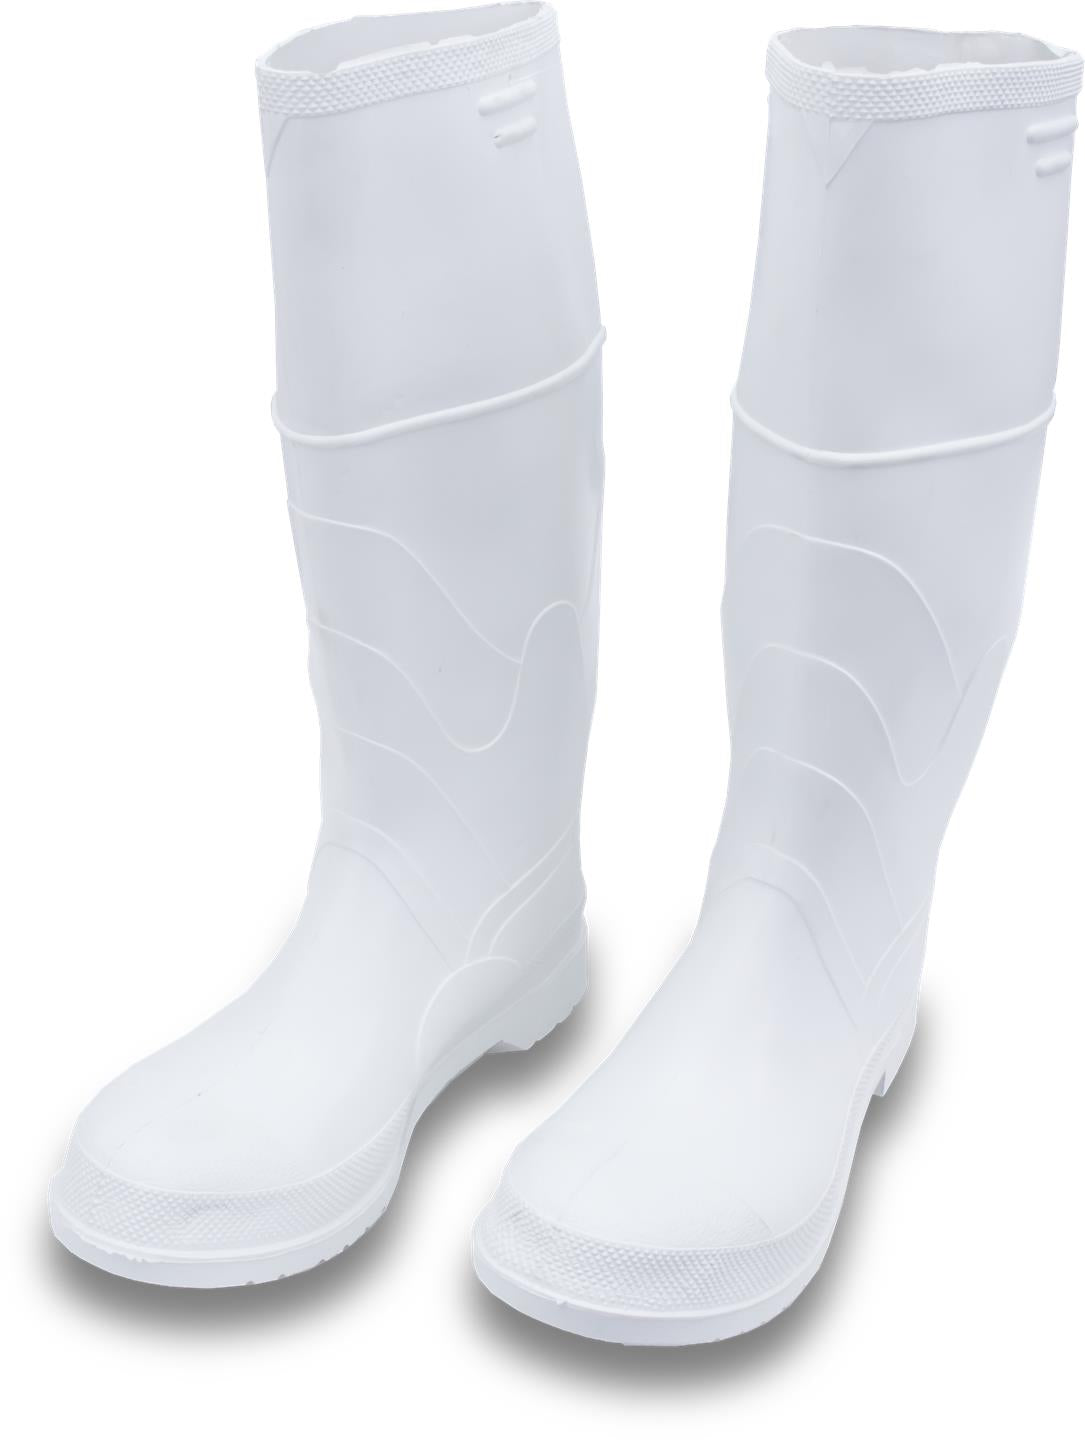 Marshalltown 13466 White Boots - Size 12